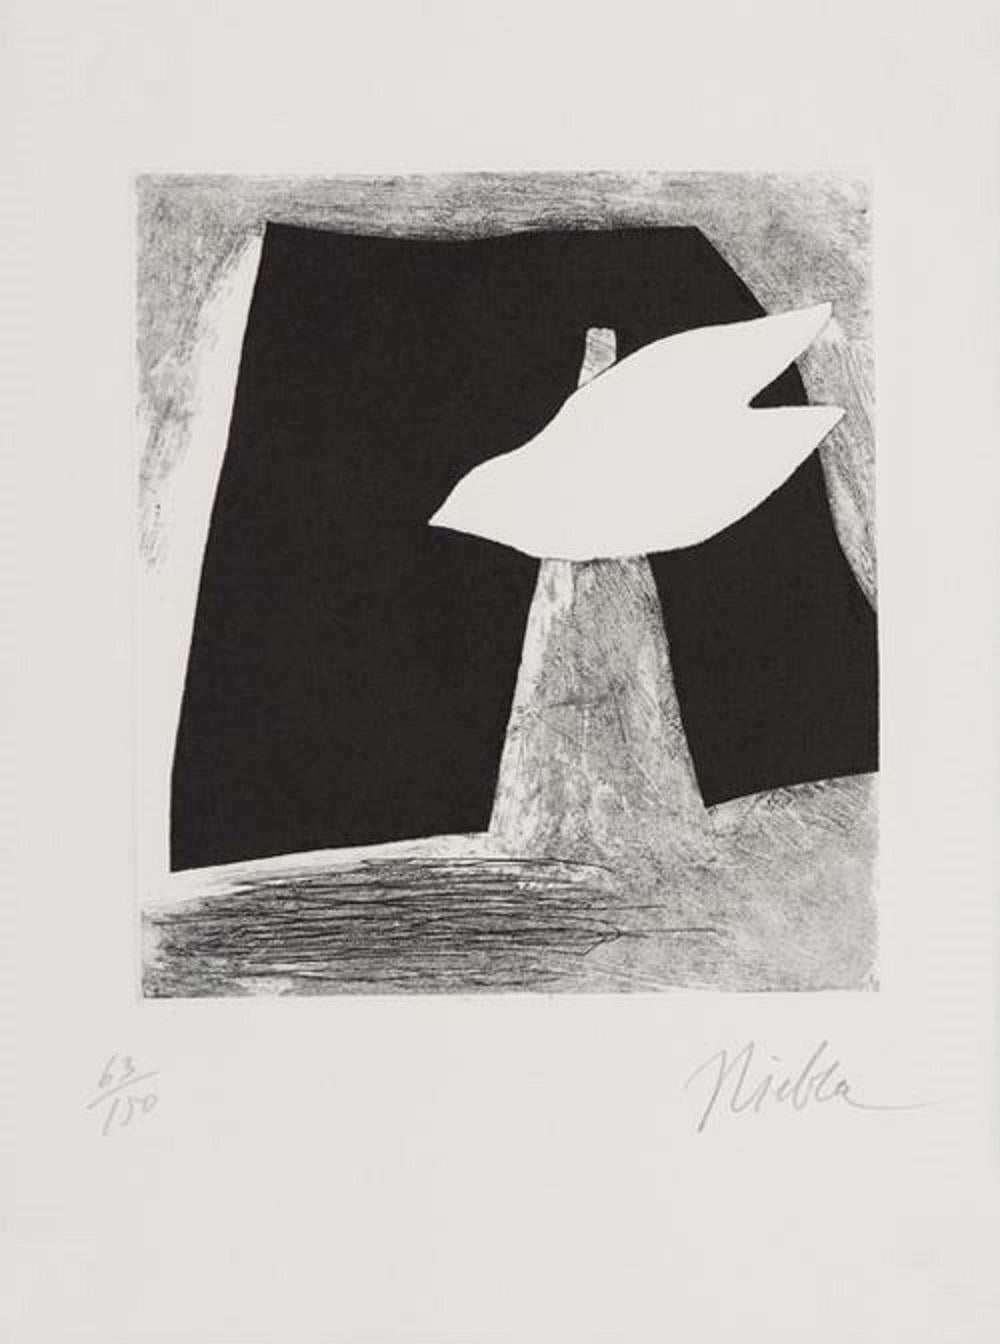 José Niebla Spanish Artist Original Hand Signed silkscreen 1996 n3 - Print by Jose Niebla